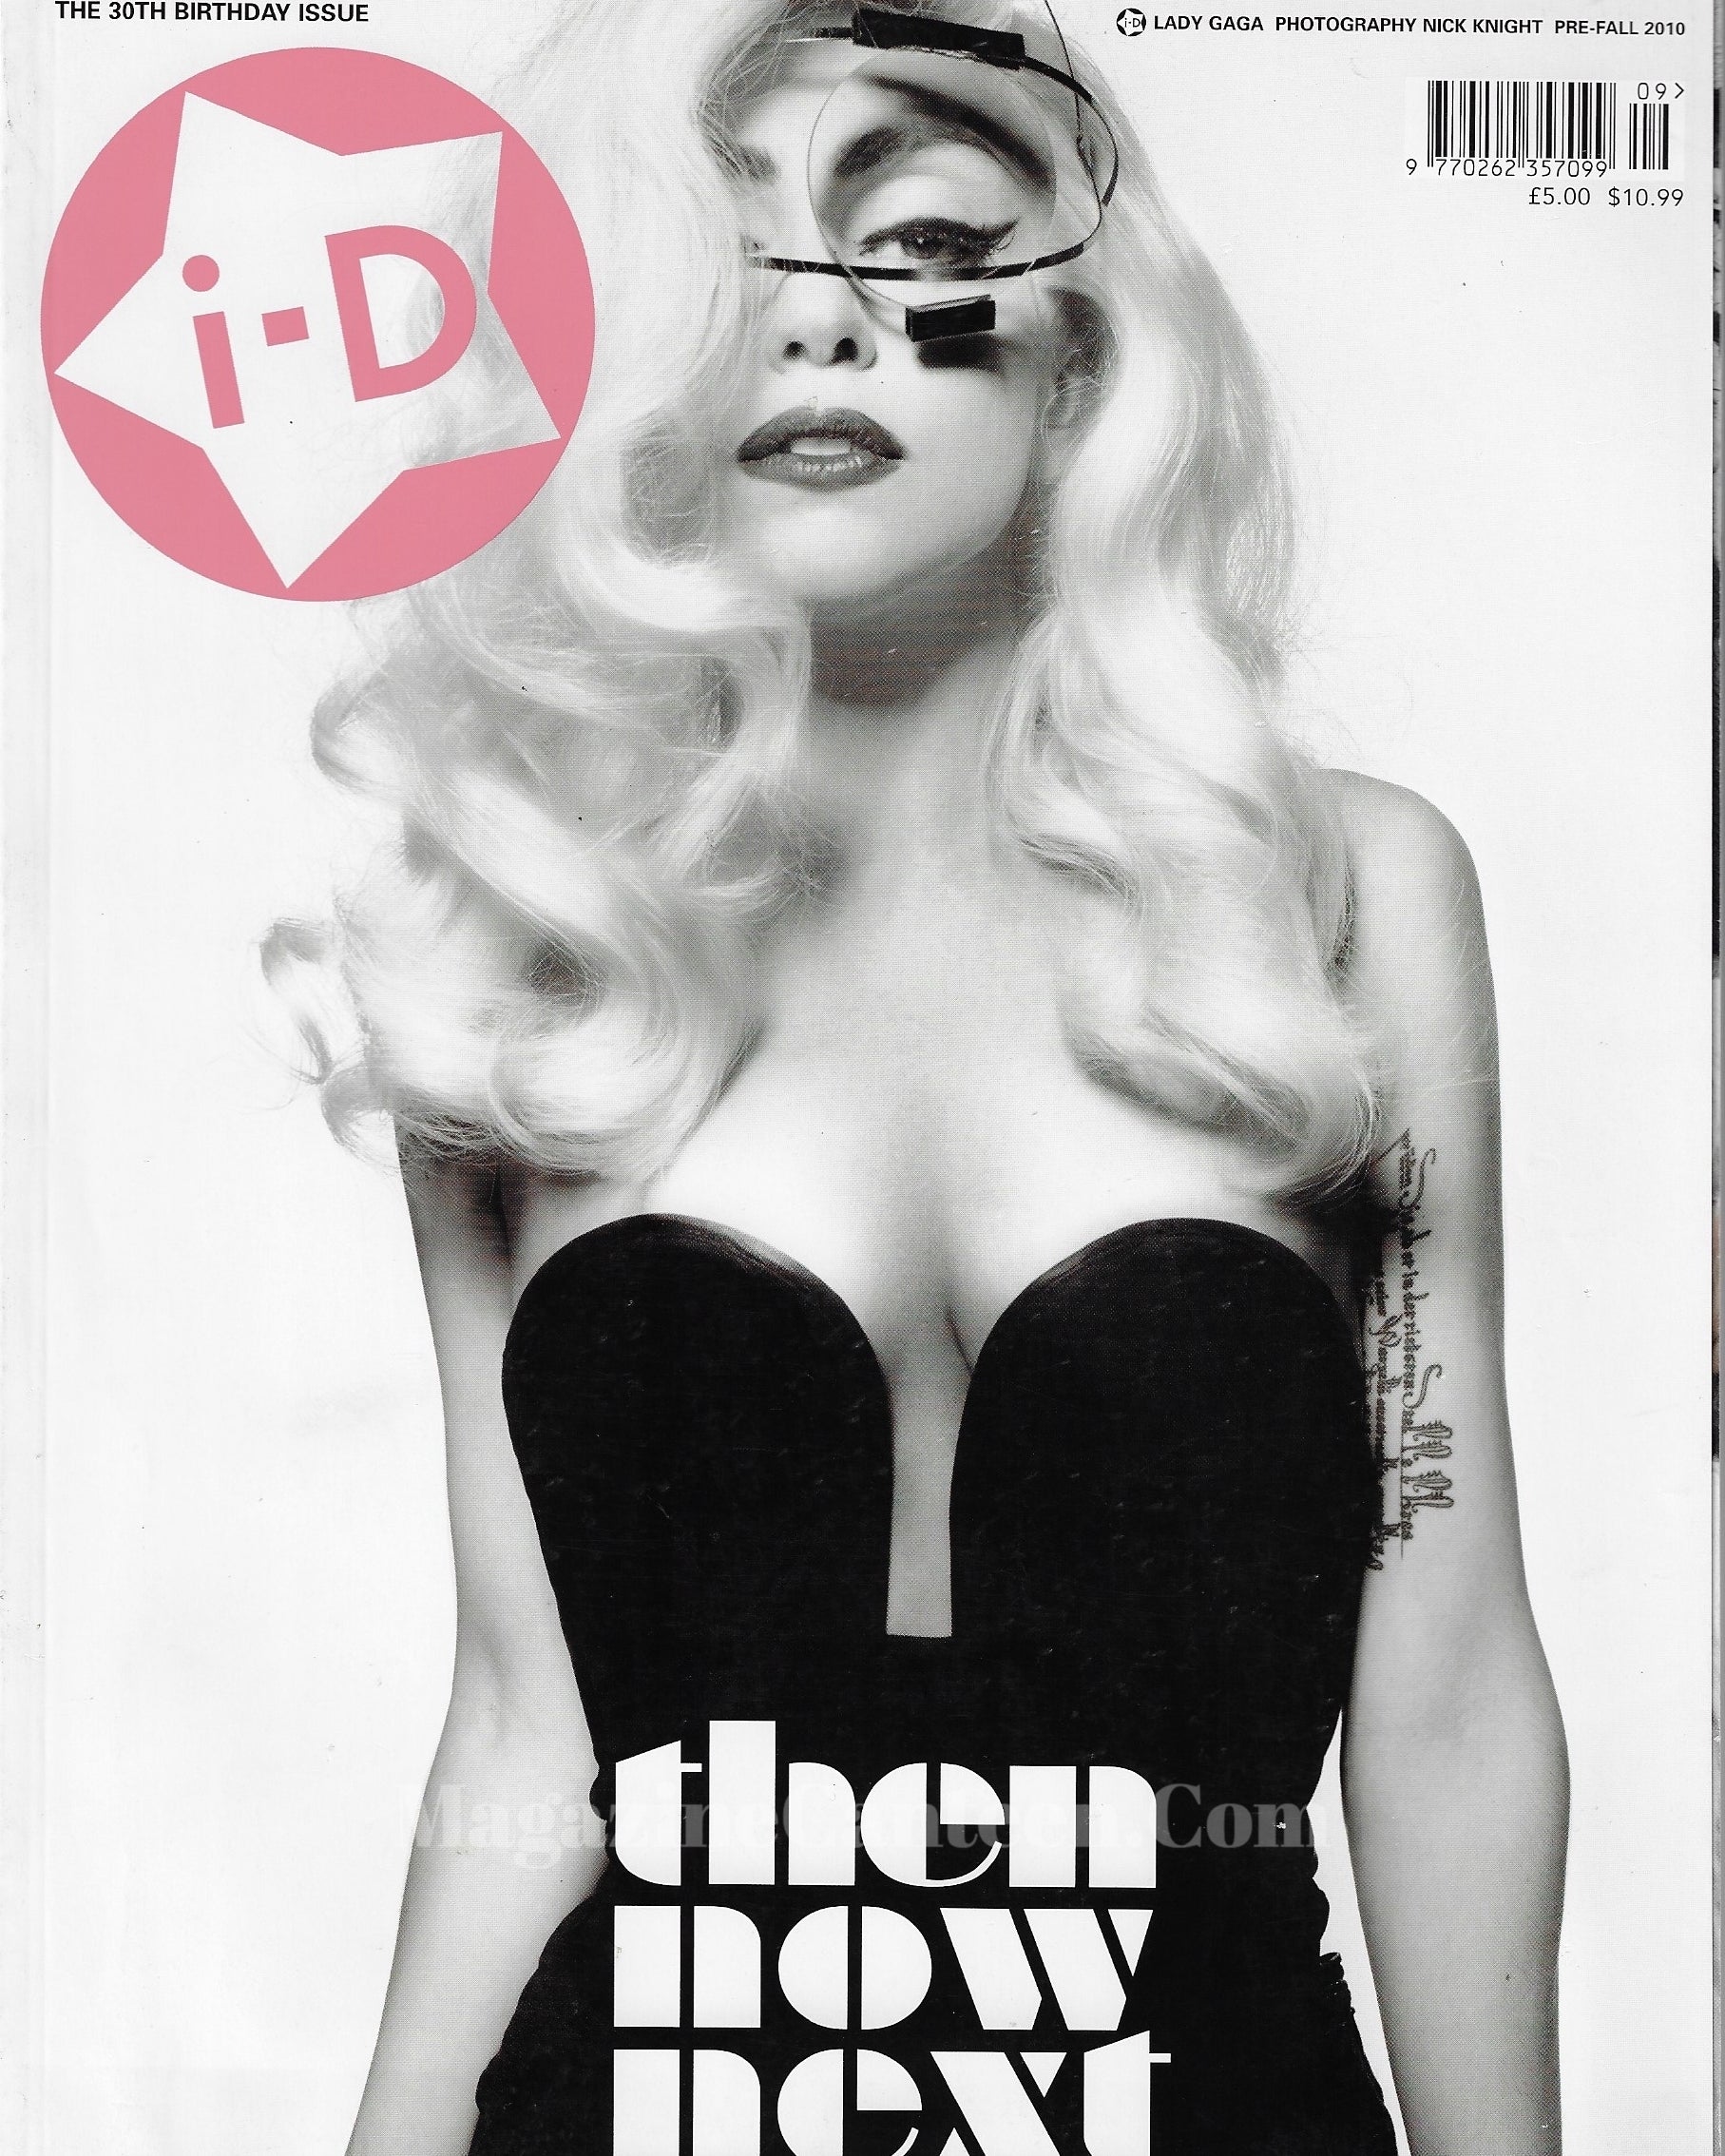 I-D Magazine 308 - Lady Gaga 2010